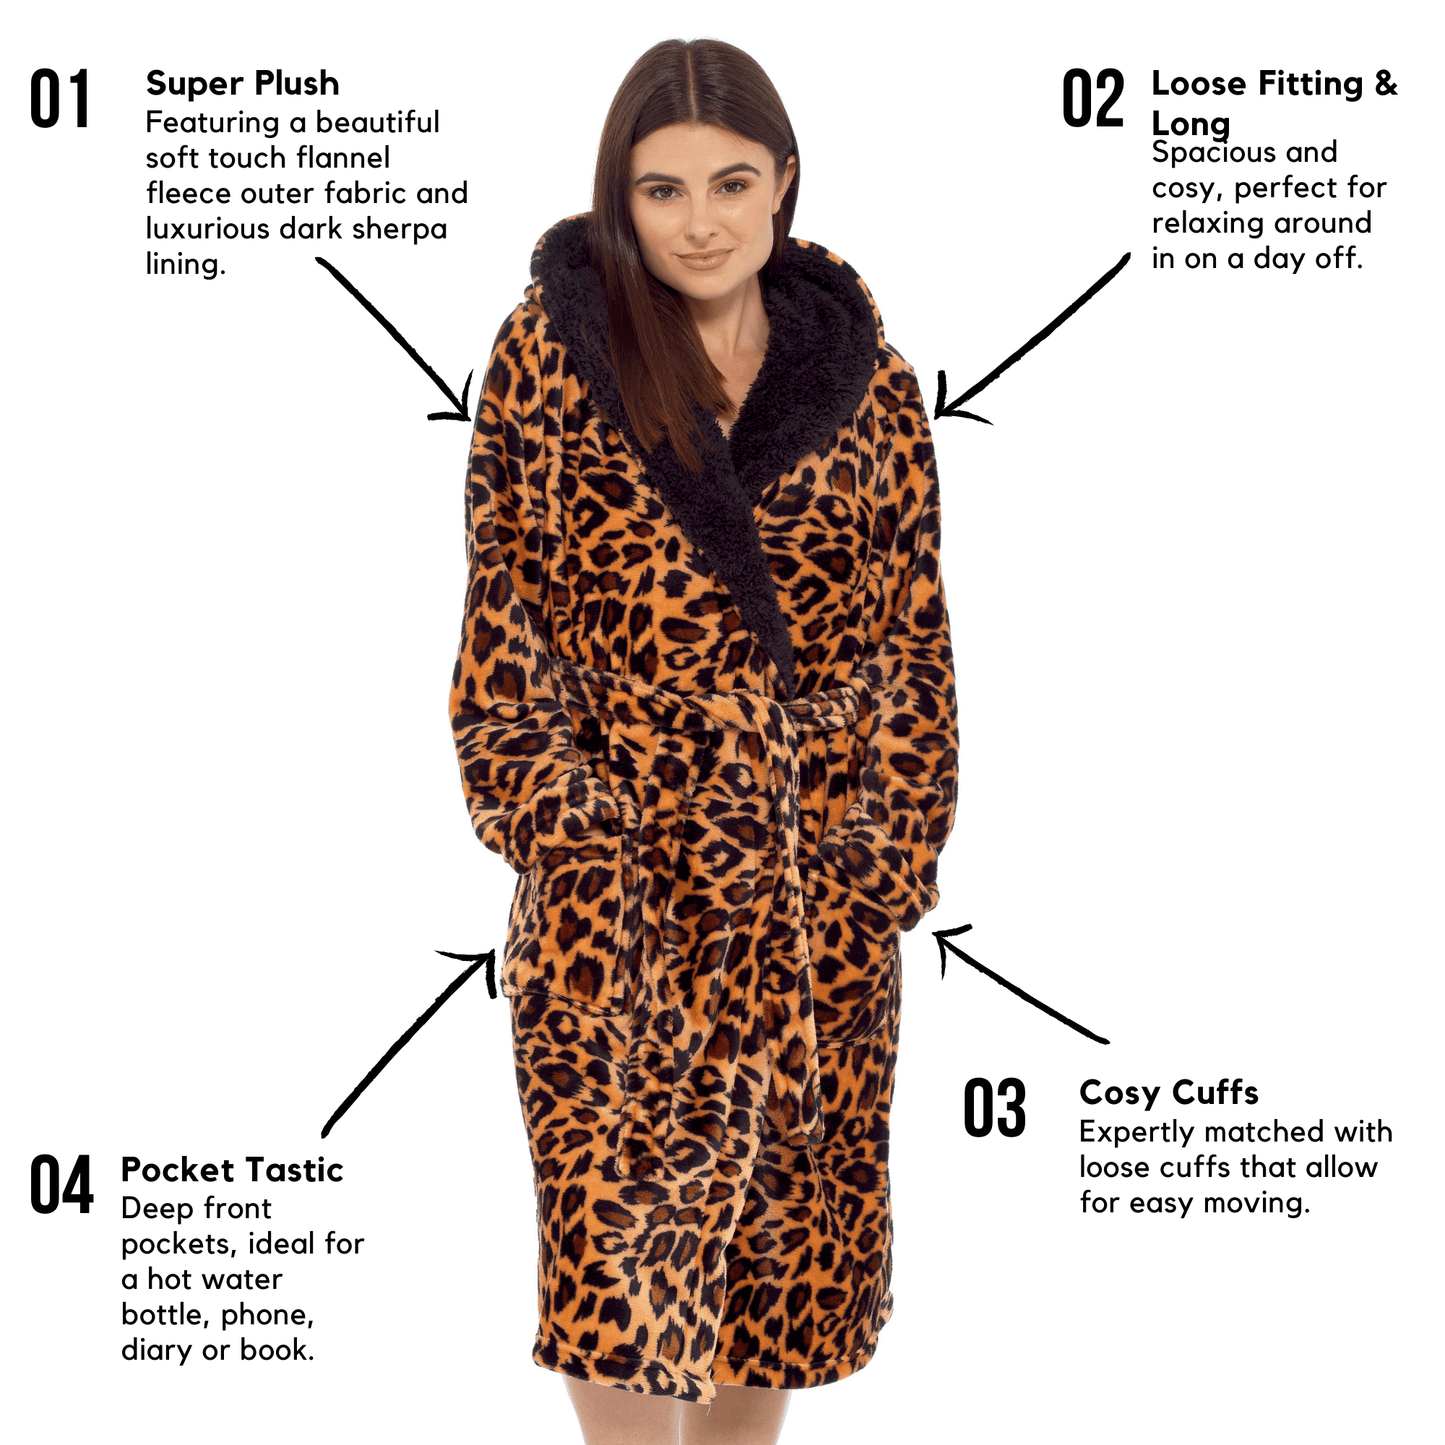 Women's Leopard Plush Fleece Hooded Robe Dressing Gown, Ladies Bath Robe Loungewear. Buy now for £20.00. A Robe by Daisy Dreamer. 12-14, 16-18, 20-22, 8-10, animal, black, bridesmaid, cheetah, dressing gown, flannel, fleece, gym, hooded robe, hotel, ladie